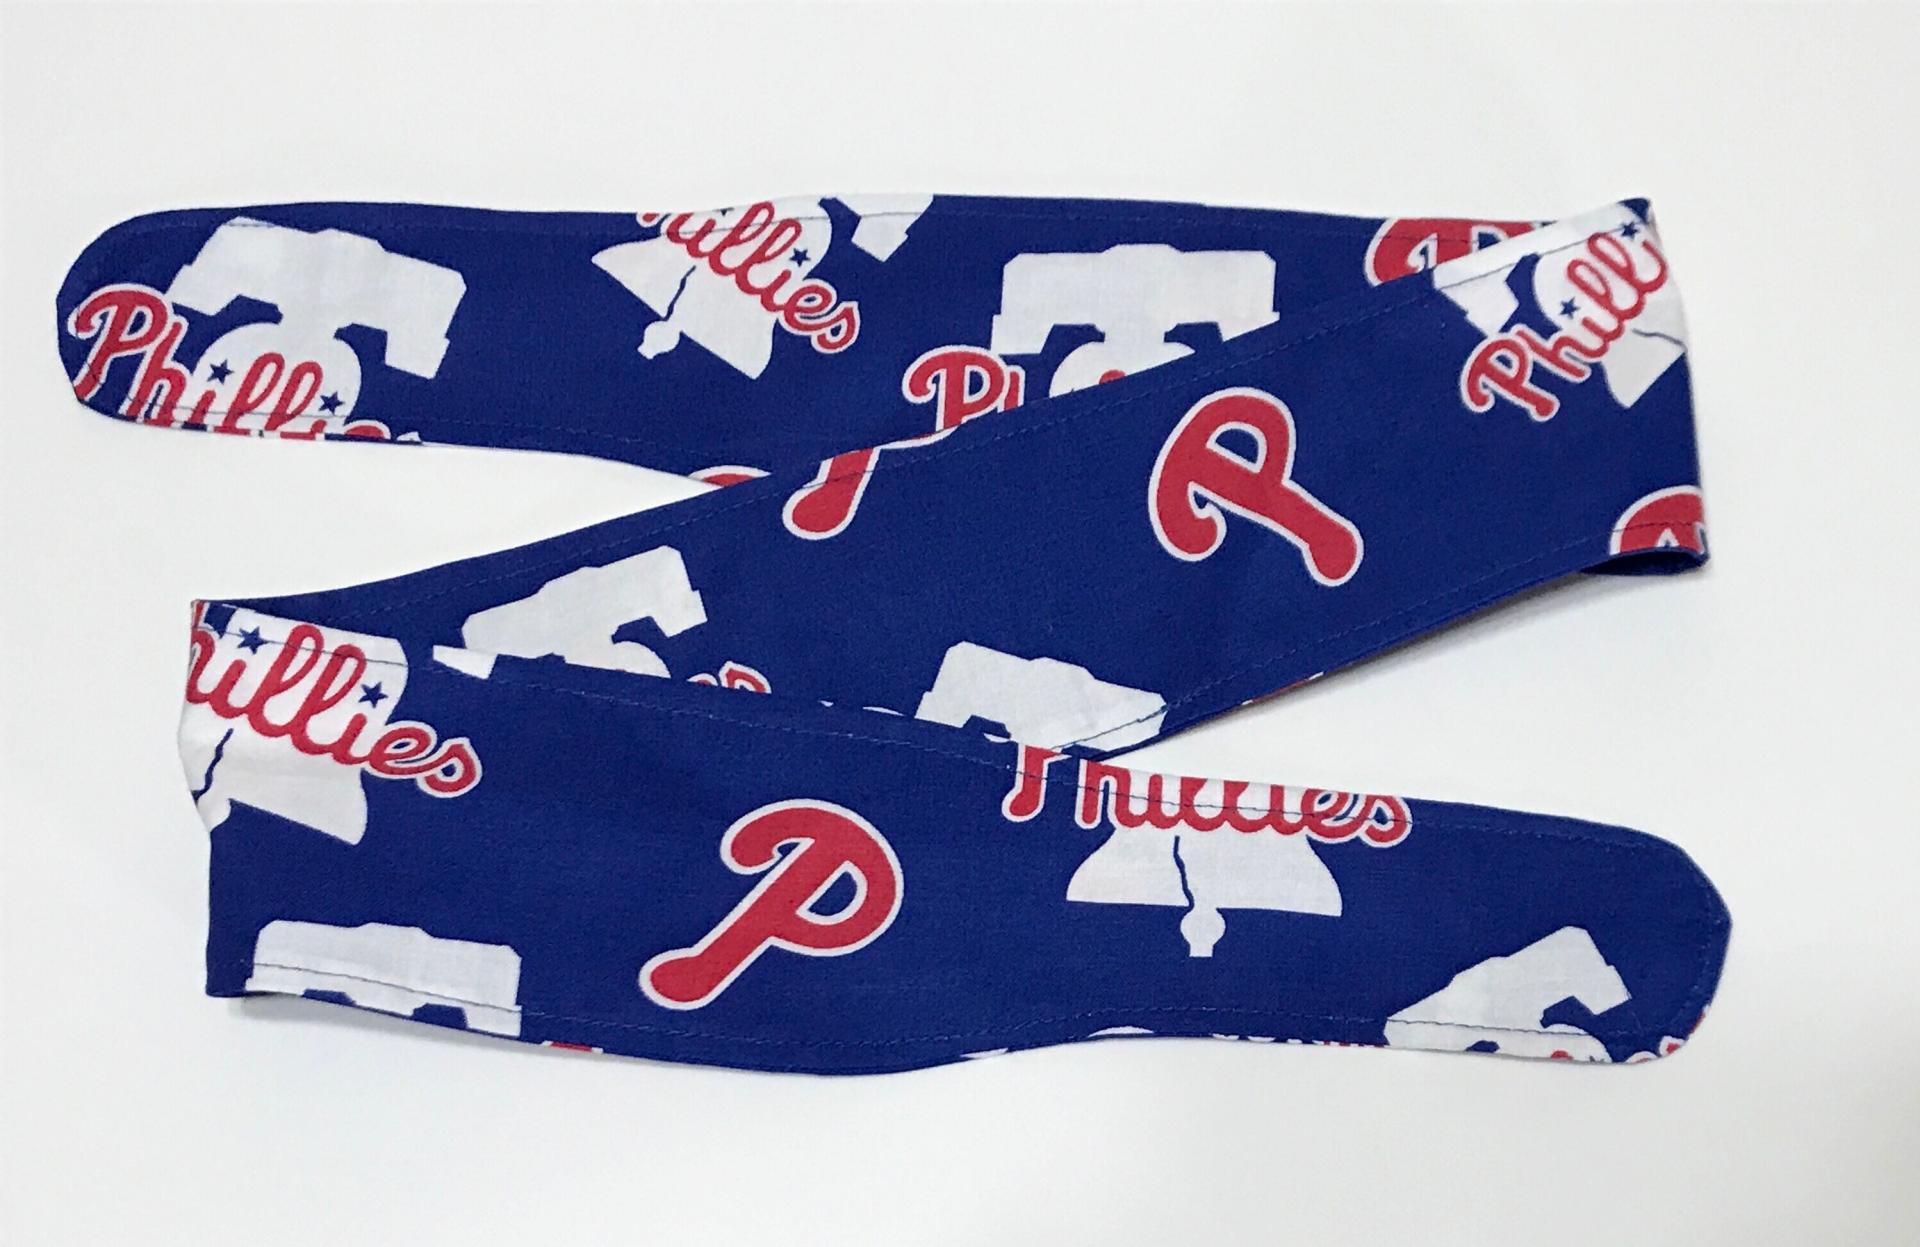 3” Wide Philadelphia Phillies Headband, hair wrap, pin up, hair tie, top knot, retro style hair accessory, rockabilly, handmade